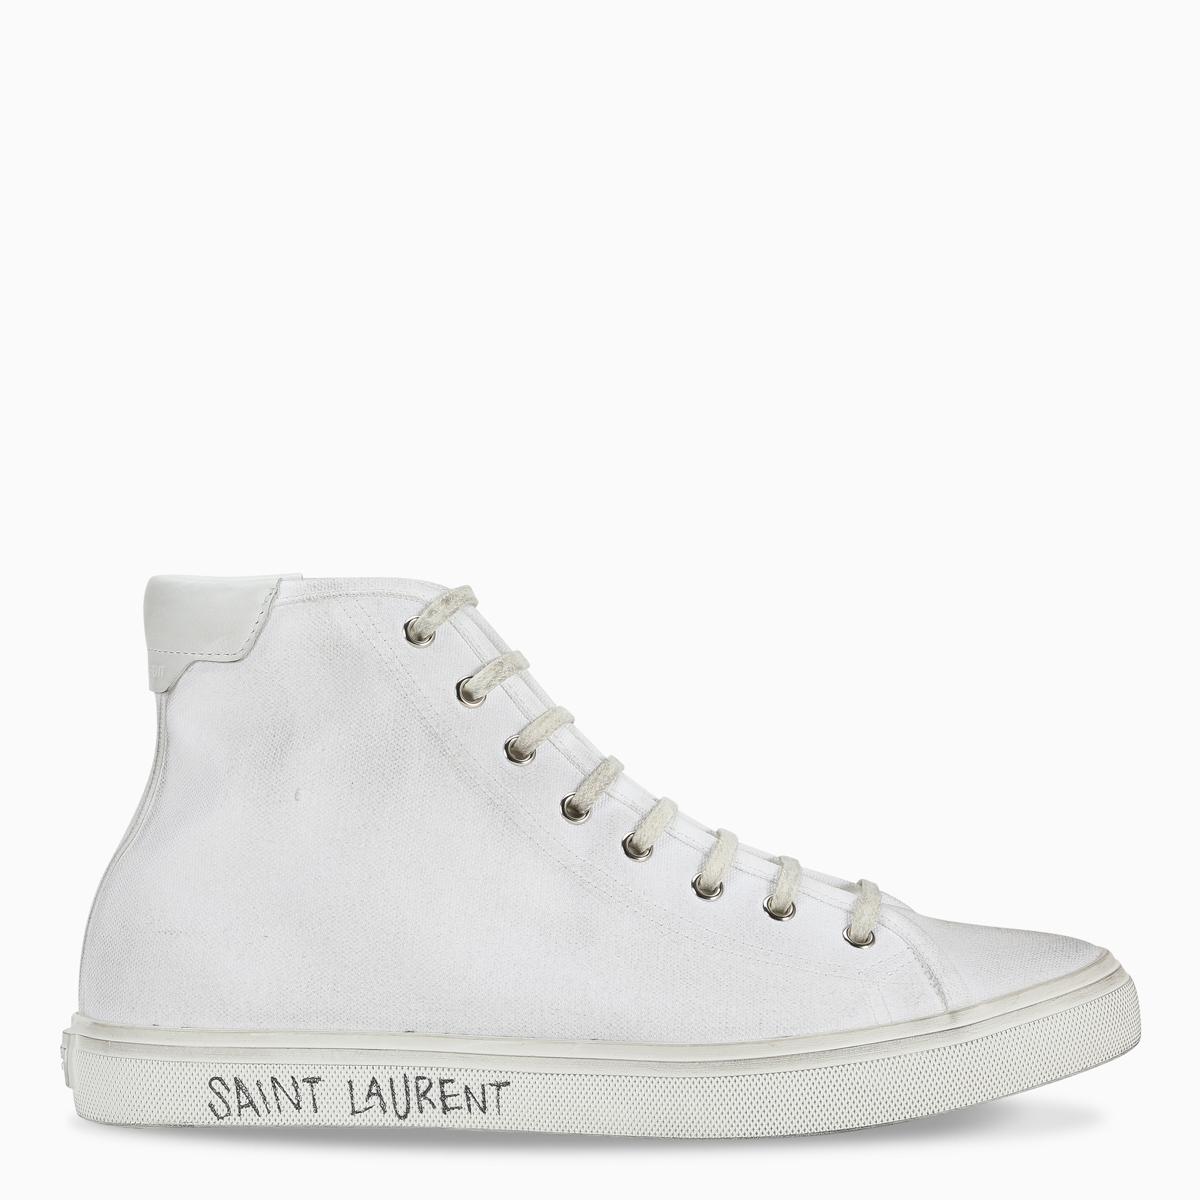 Saint Laurent Cotton White Malibu High-top Sneakers for Men - Save 45%